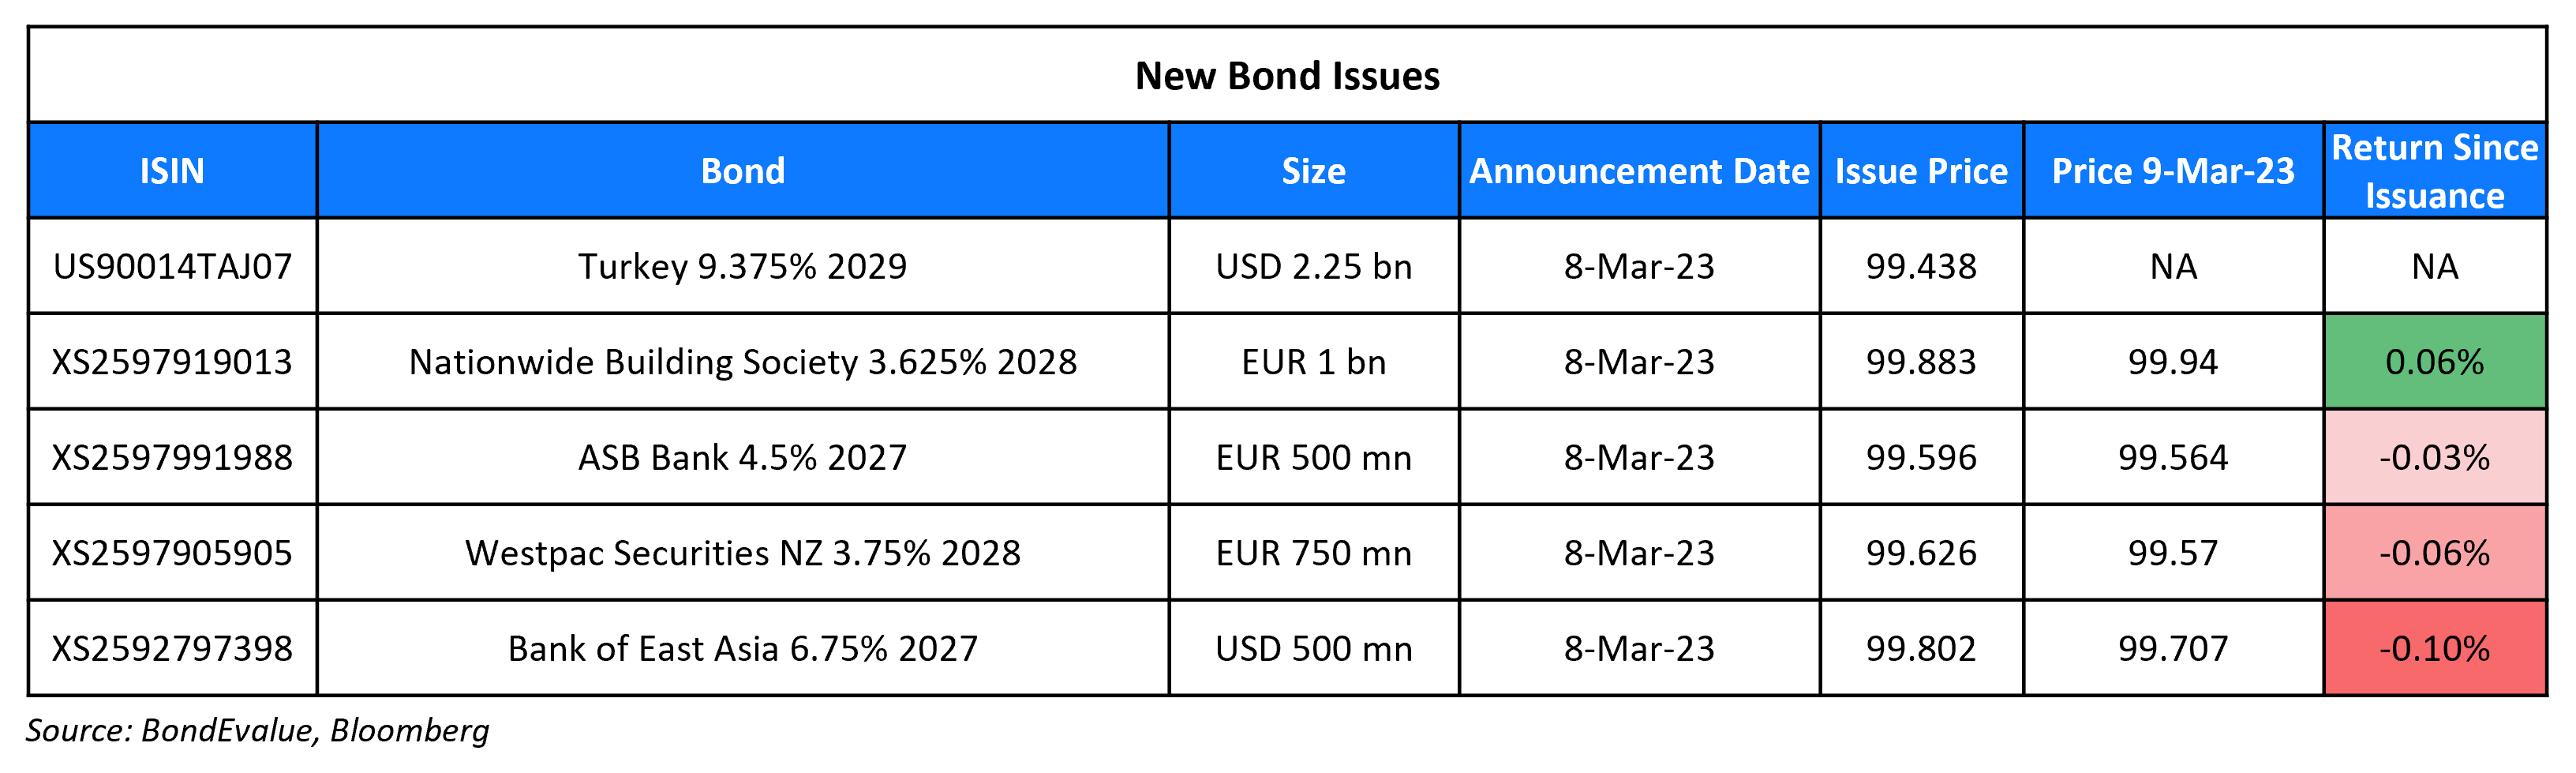 New Bond Issues 9 Mar 23